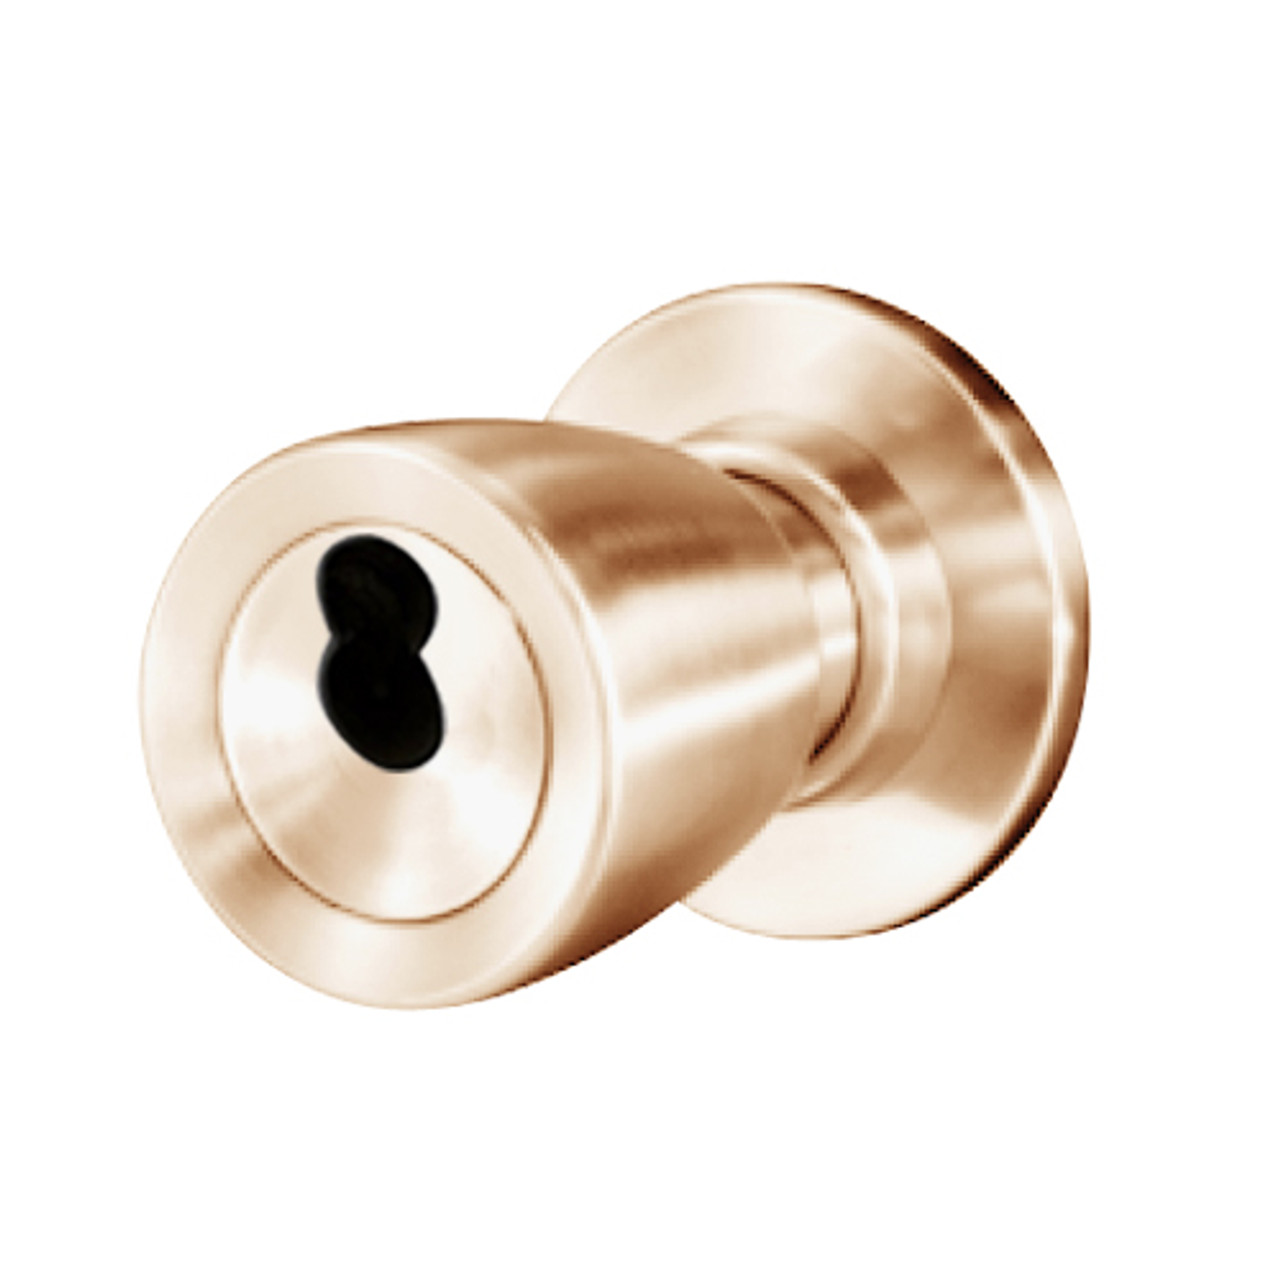 8K37B6CS3612 Best 8K Series Office Heavy Duty Cylindrical Knob Locks with Tulip Style in Satin Bronze